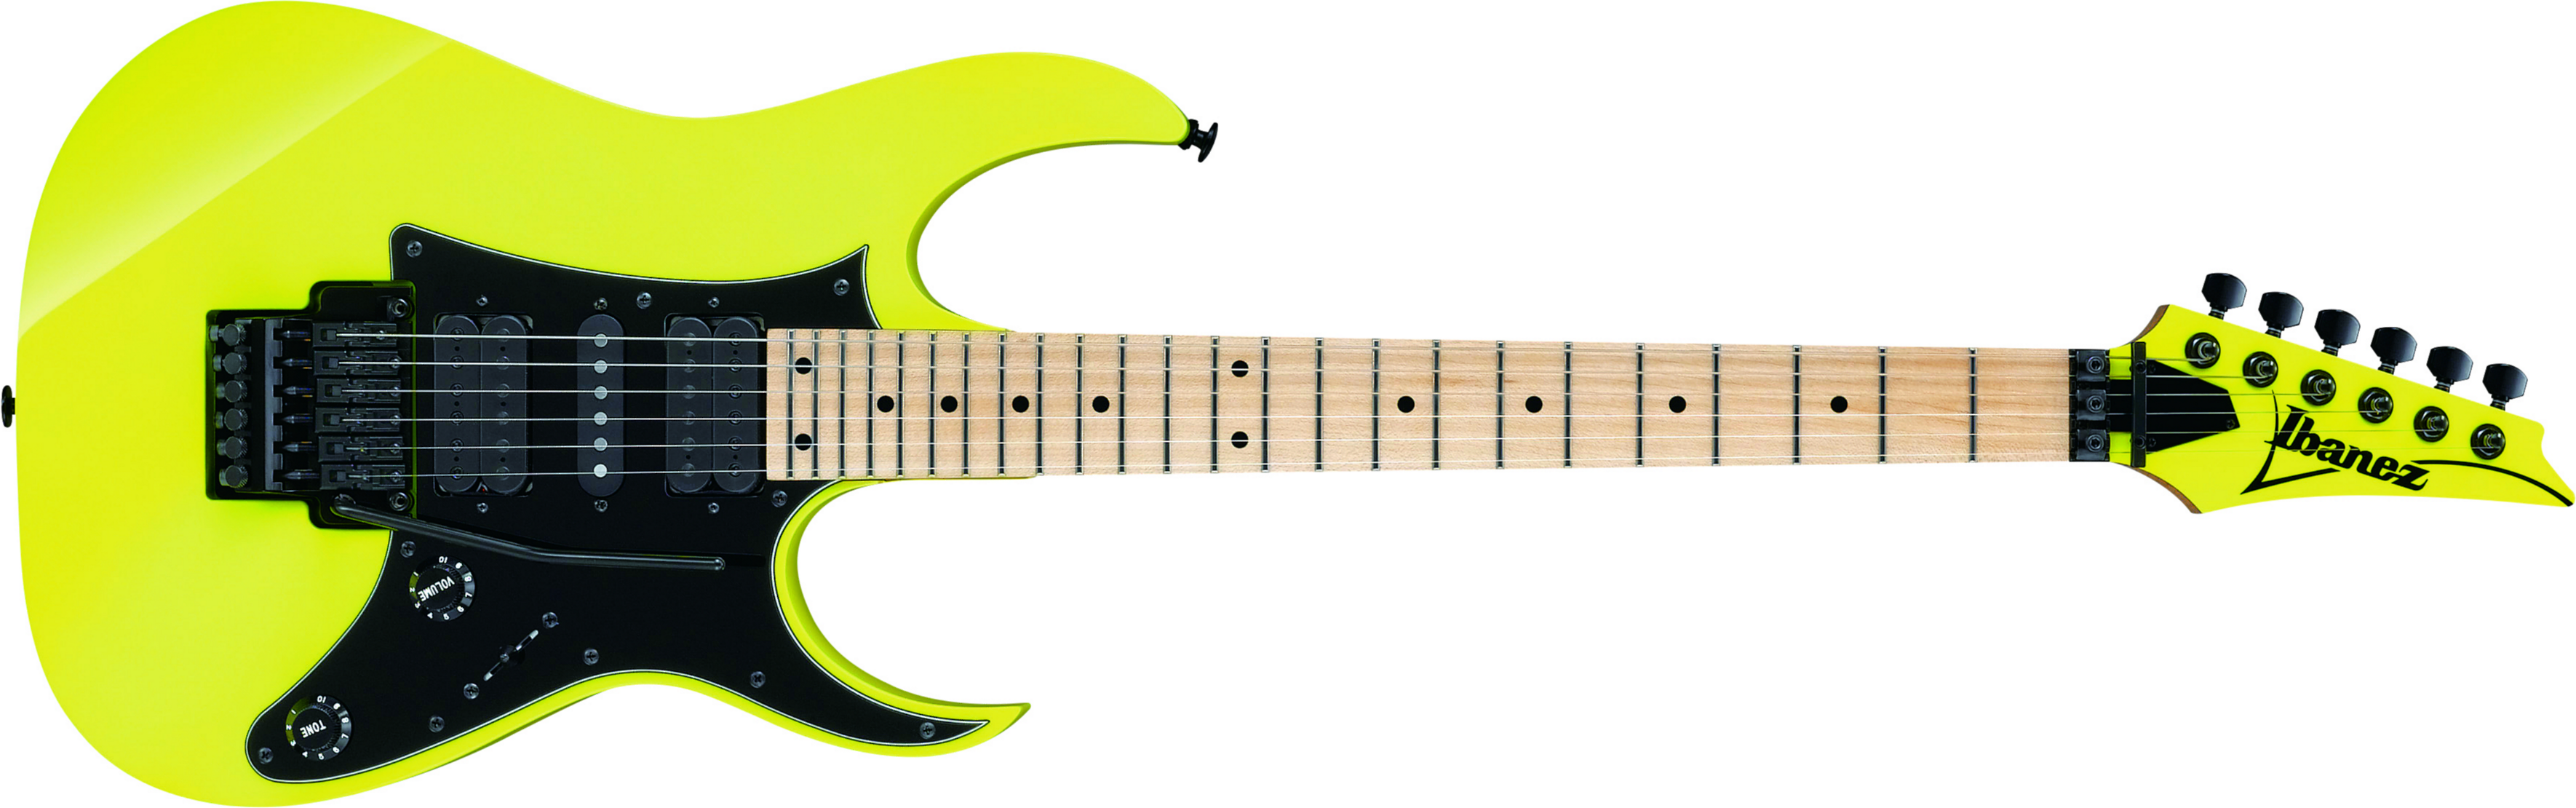 Ibanez Rg550 Dy Genesis Japon Hsh Fr Mn - Desert Sun Yellow - Str shape electric guitar - Main picture